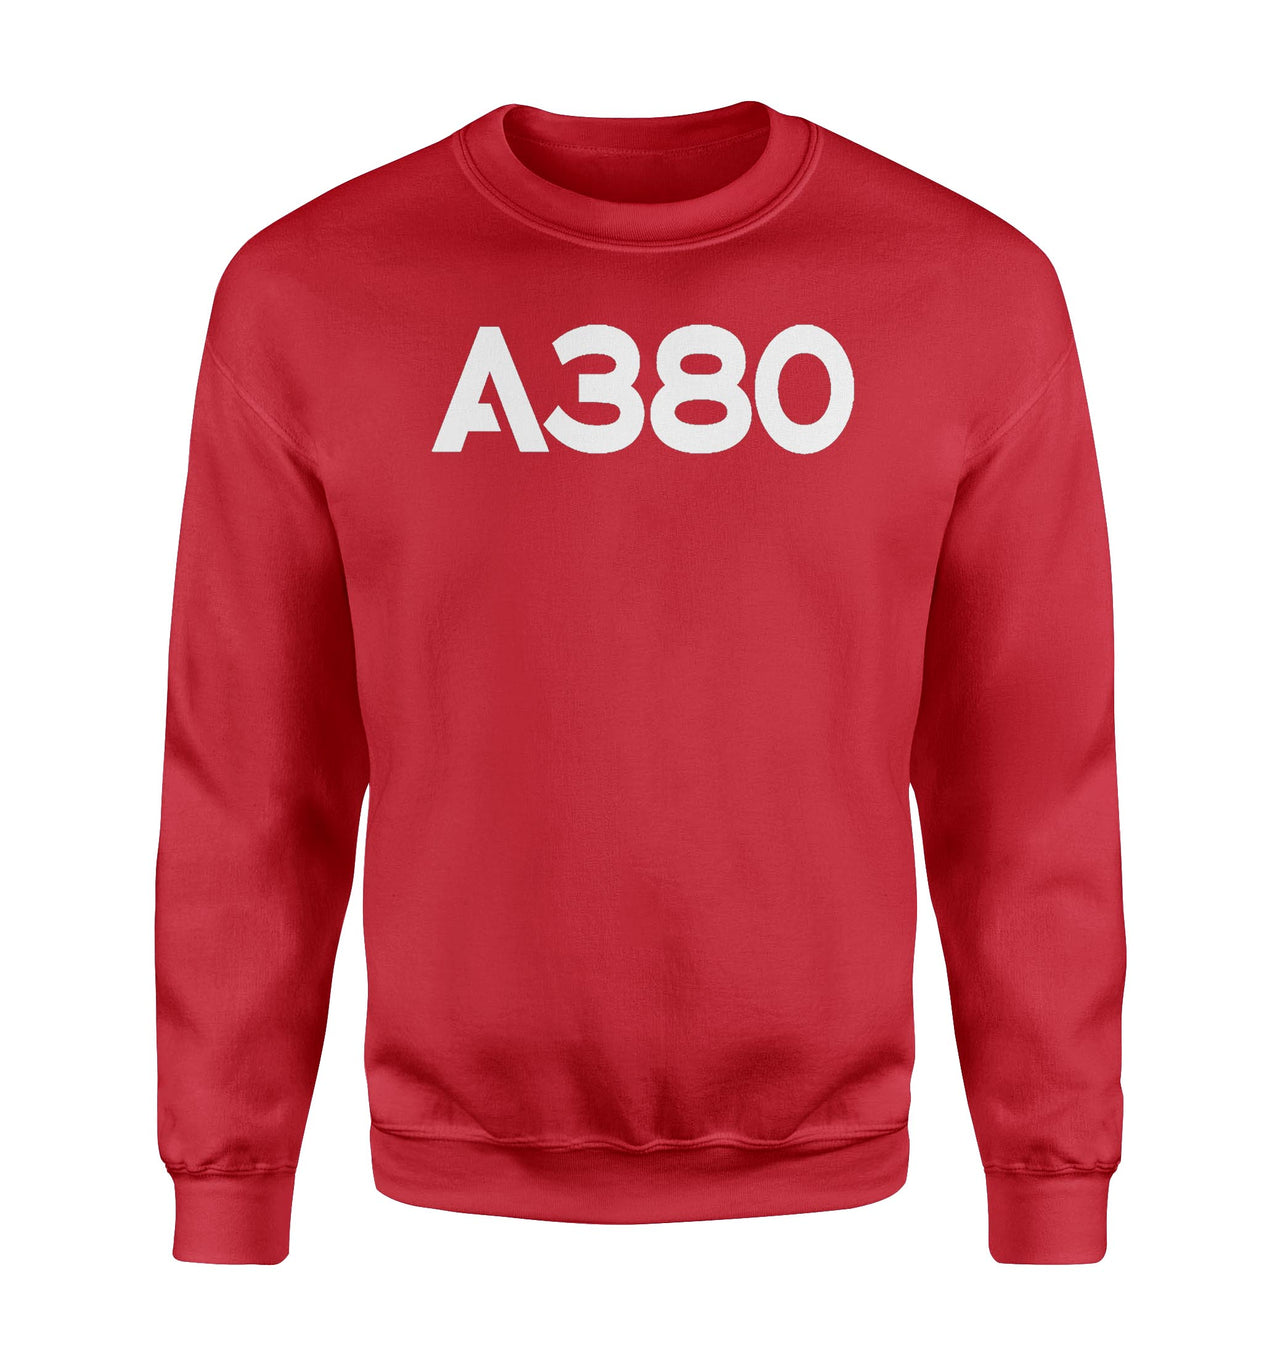 A380 Flat Text Designed Sweatshirts